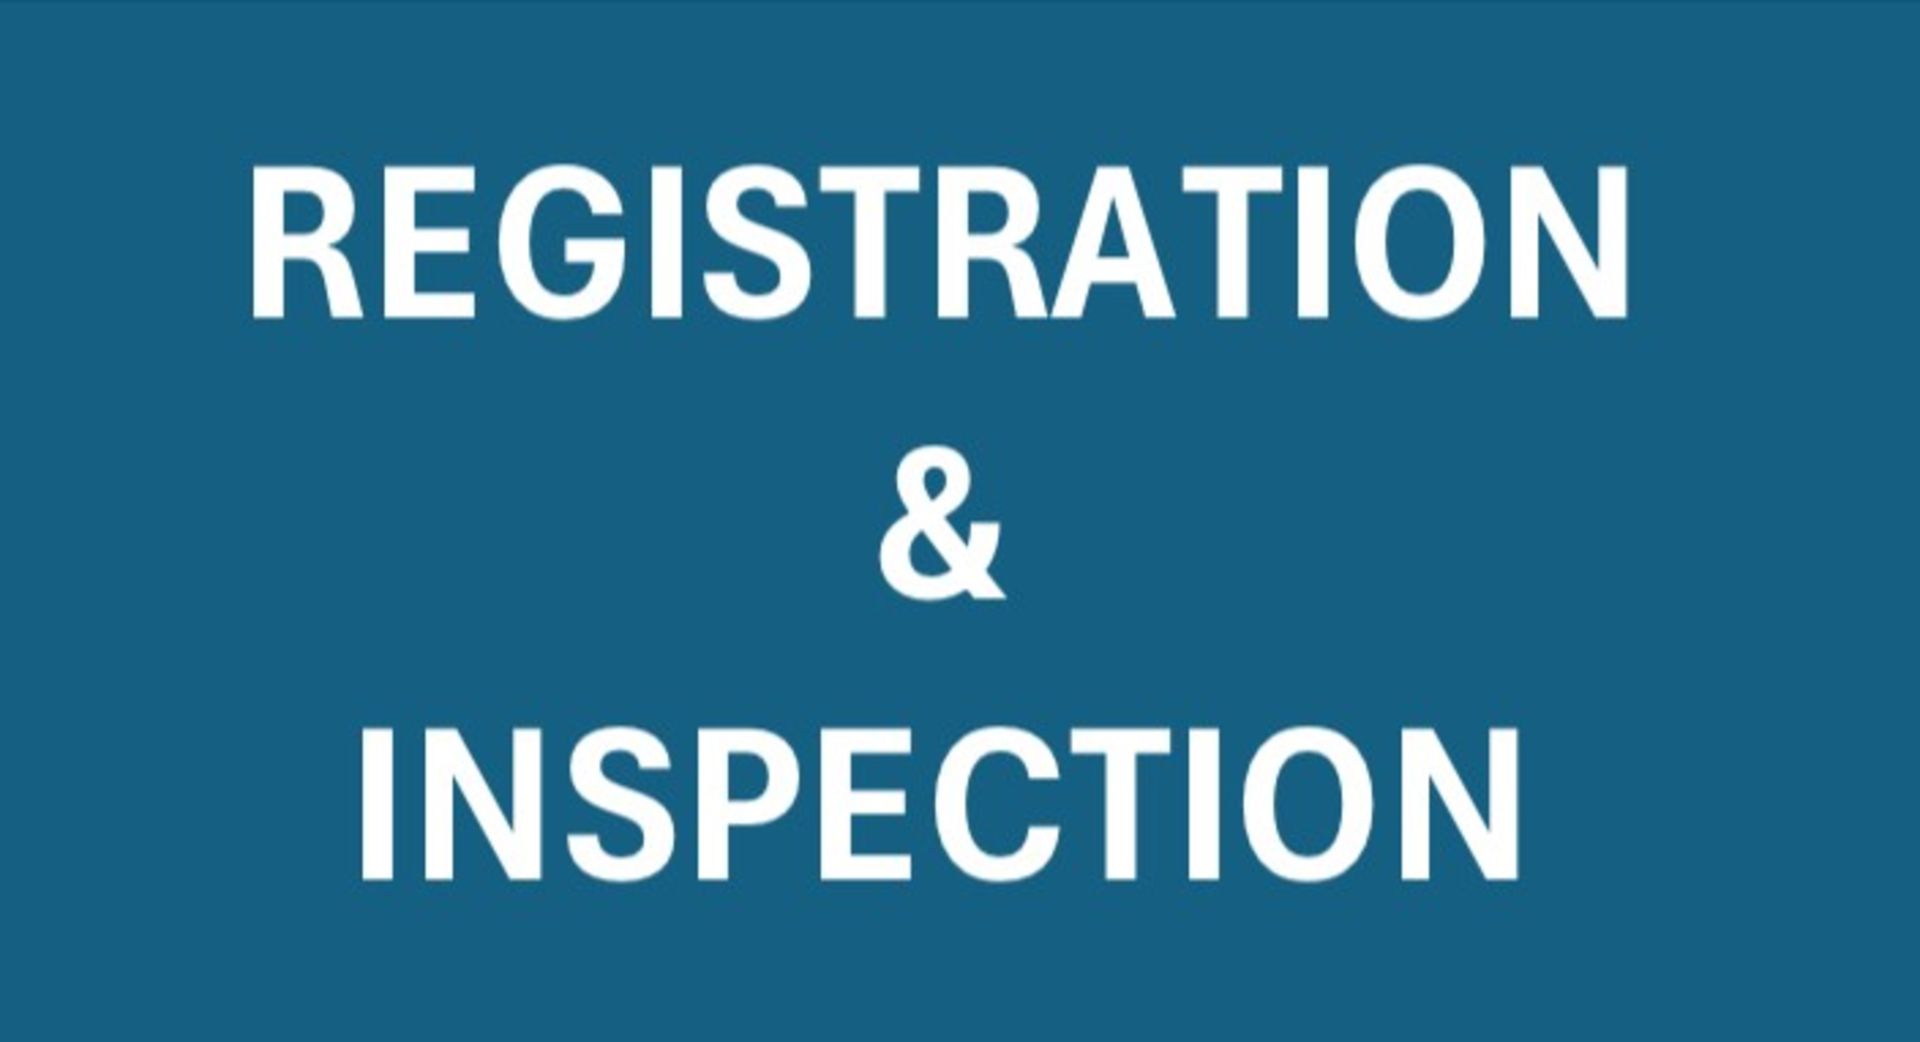 Registration & Inspection